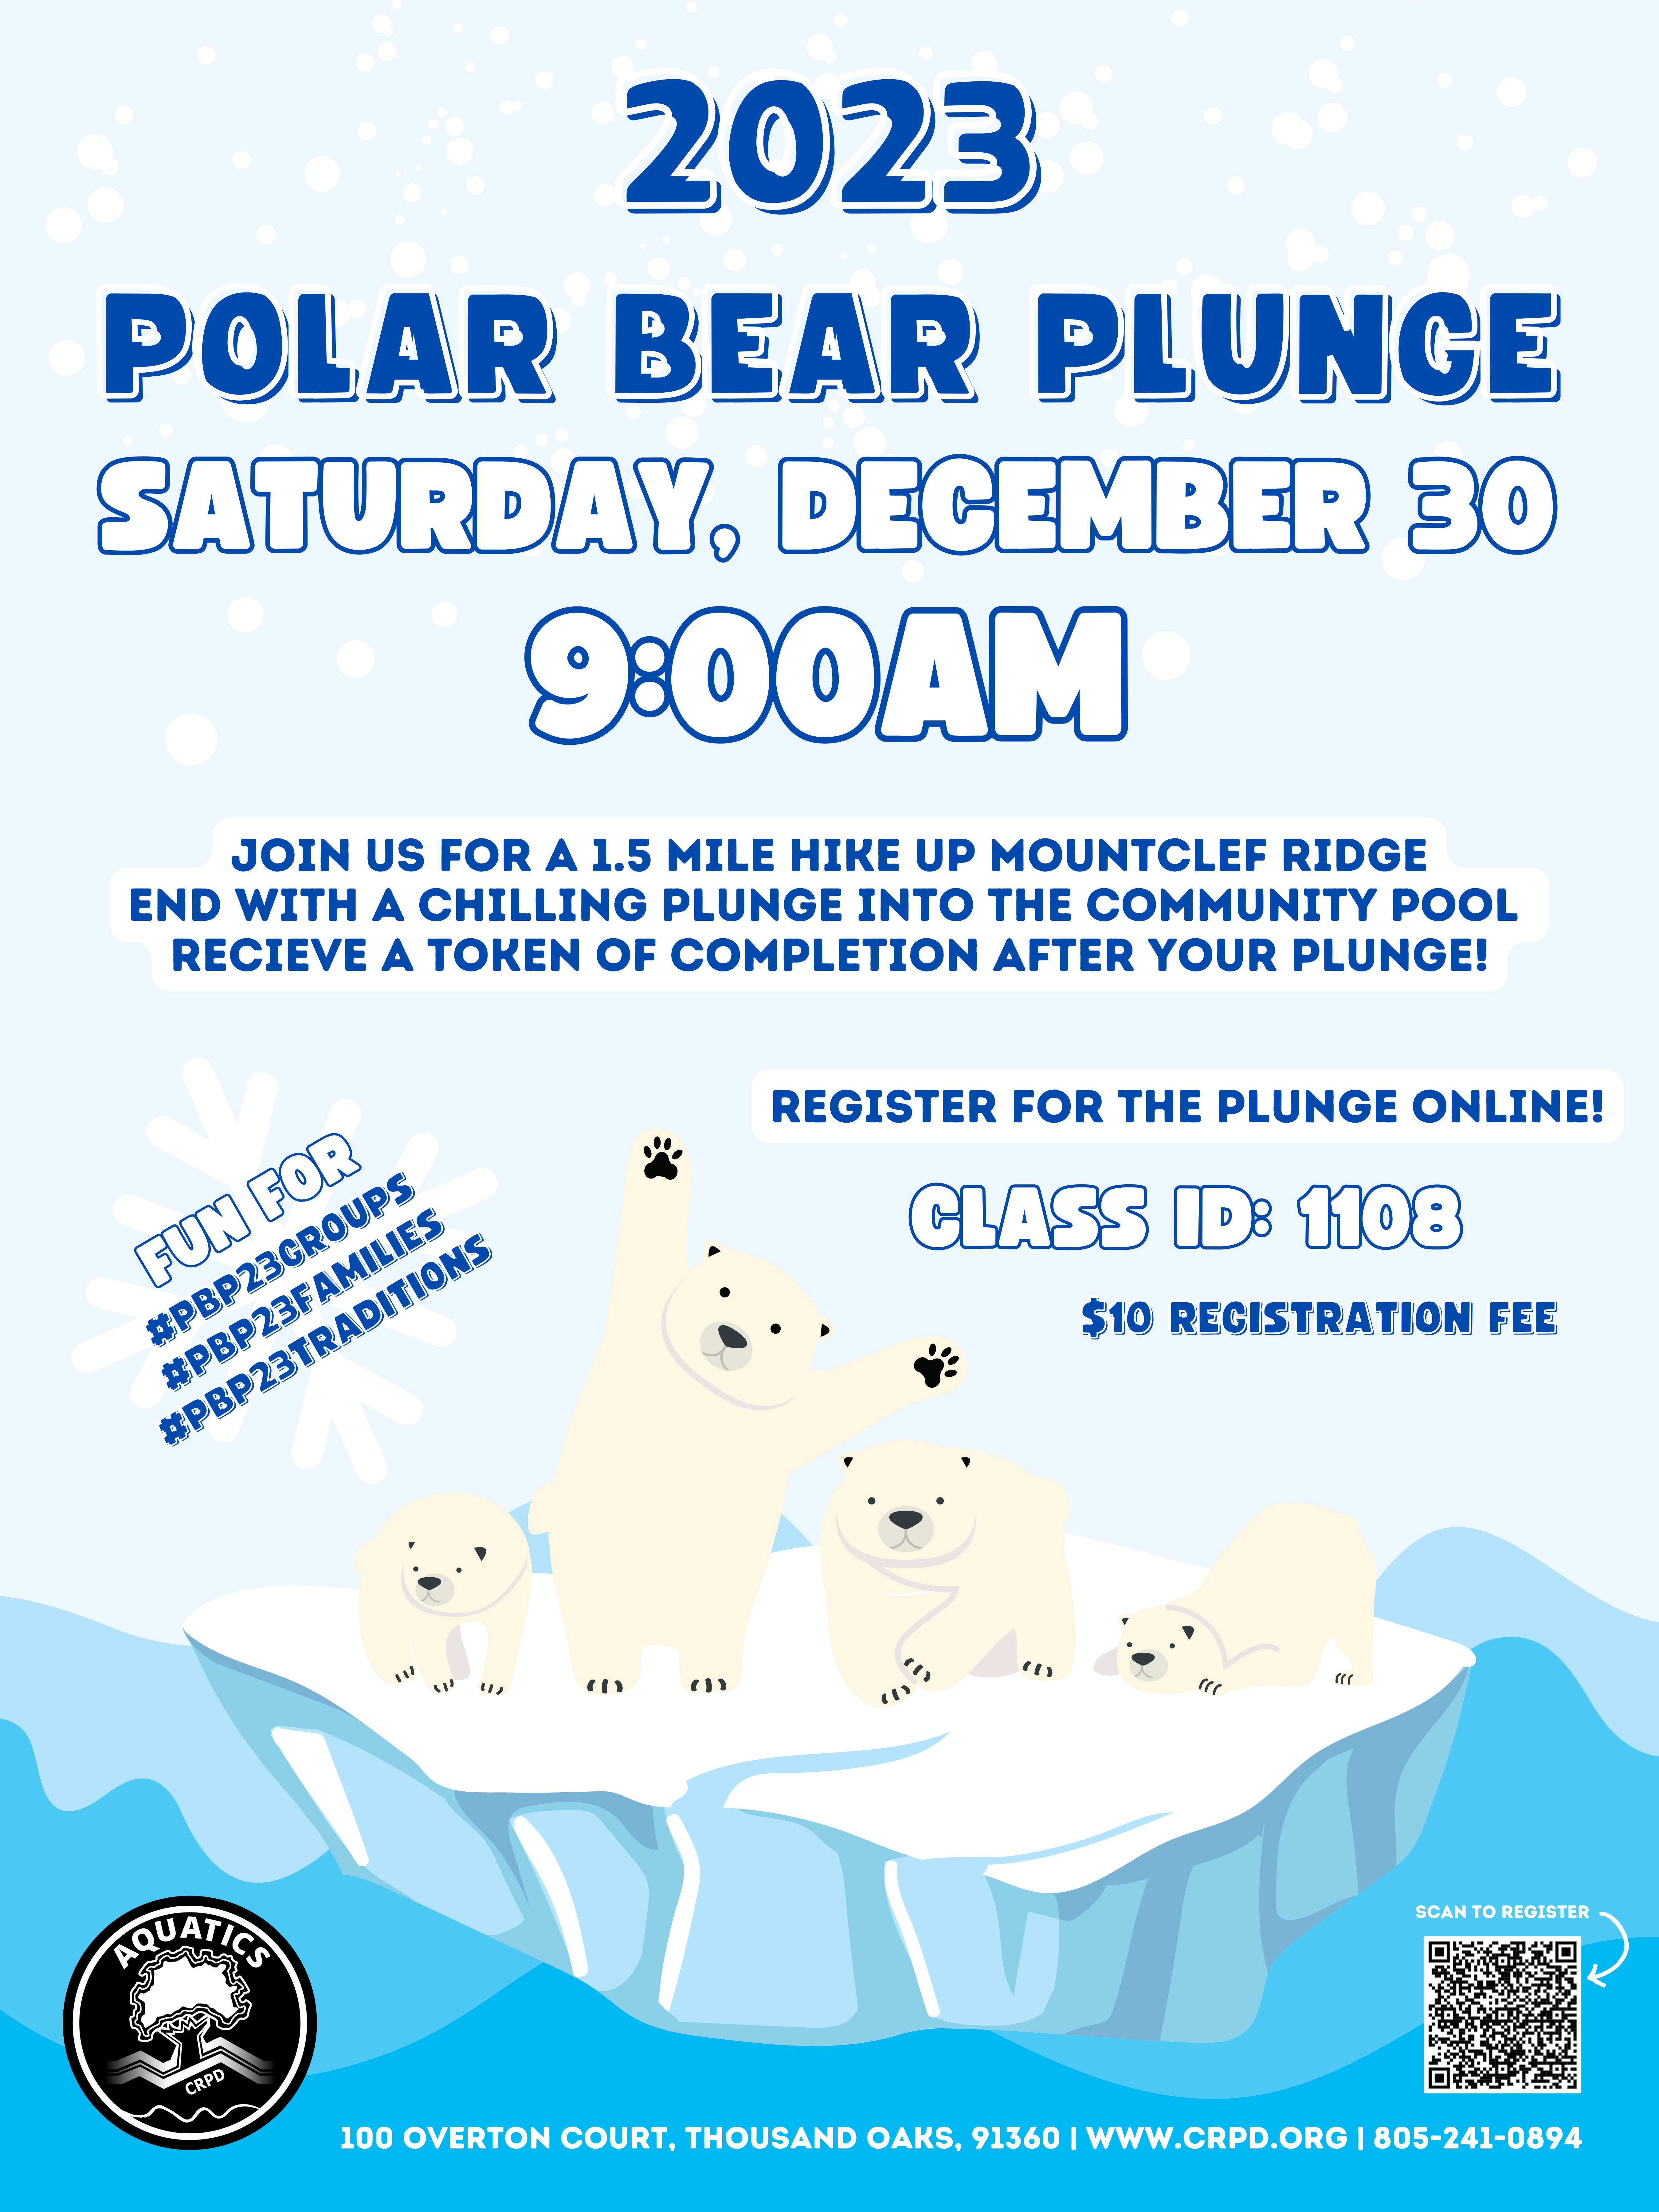 Flyer for Polar Bear Plunge event